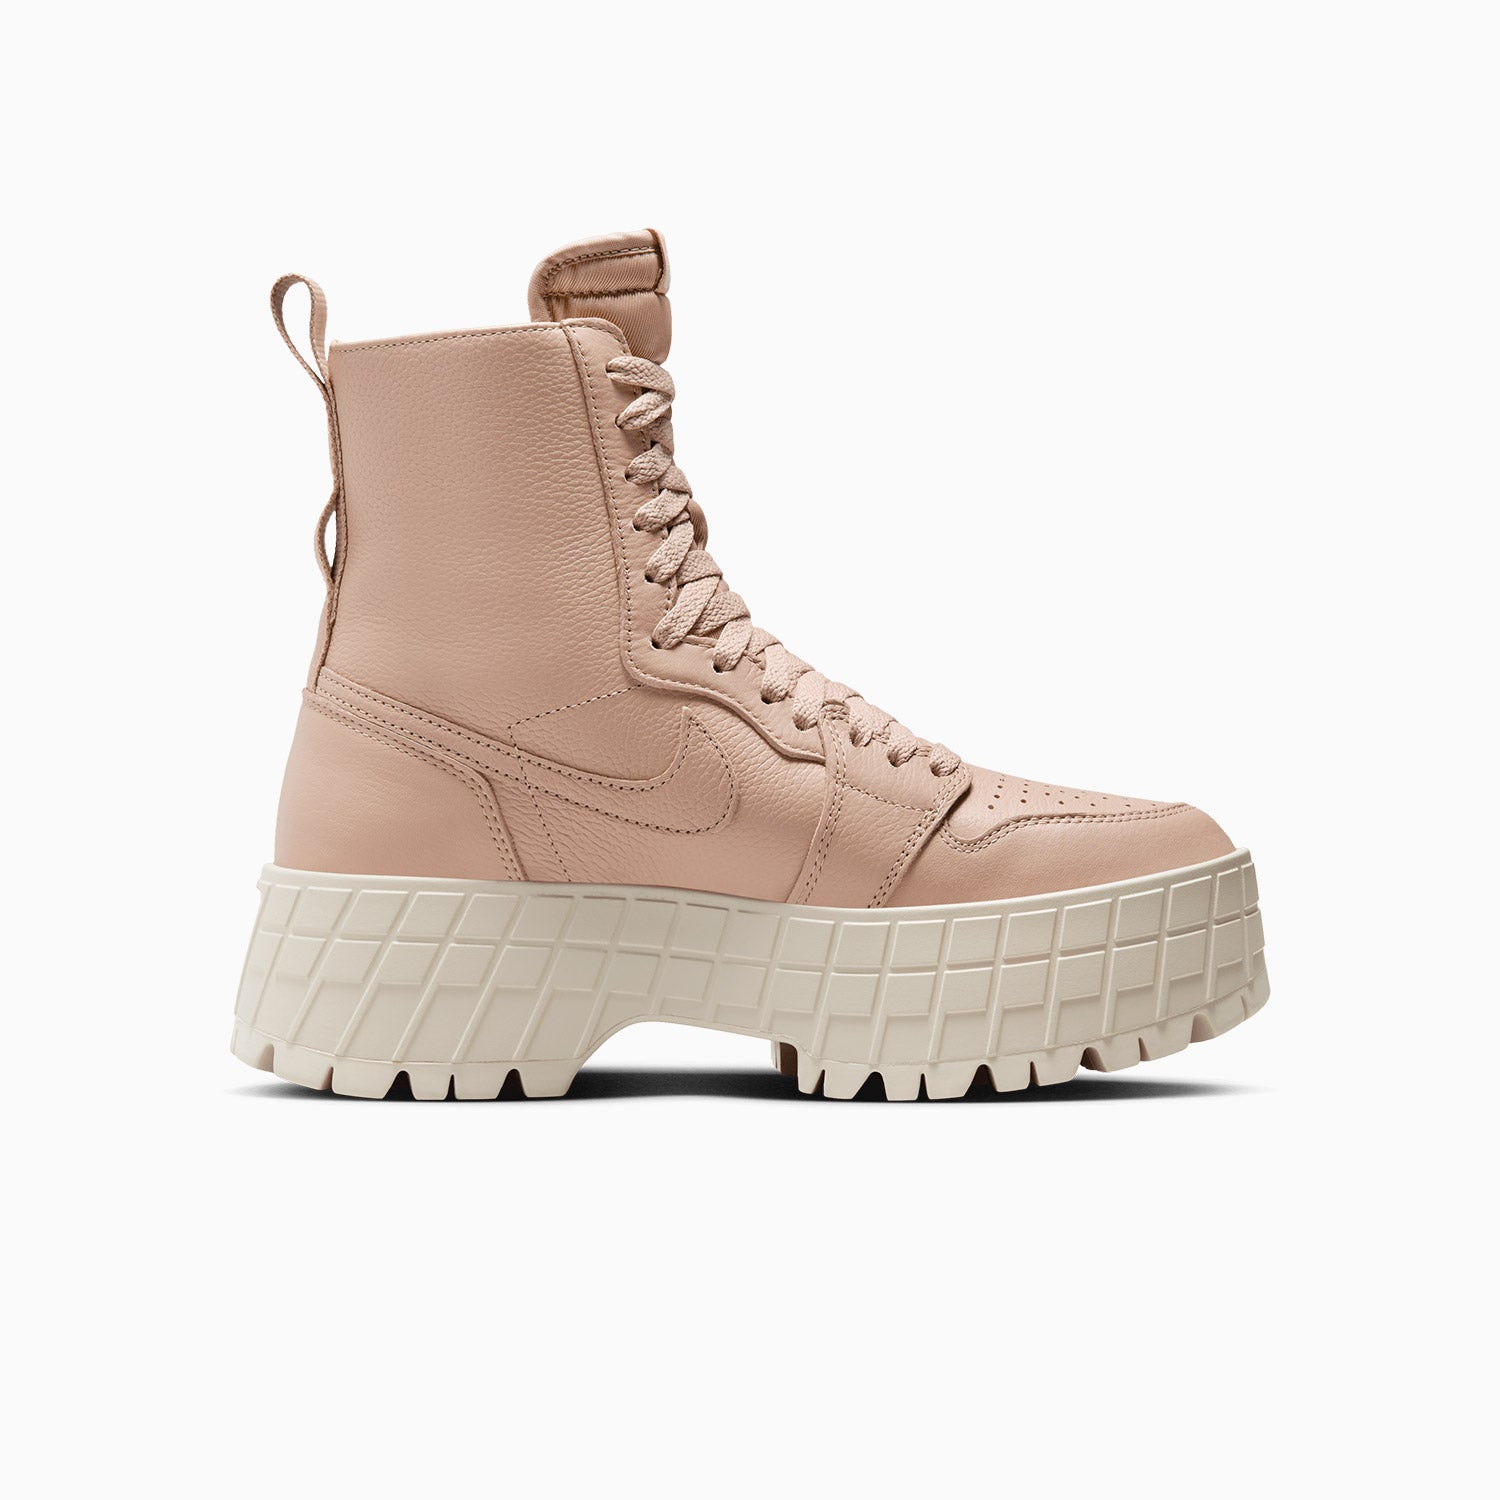 womens-air-jordan-1-brooklyn-legend-medium-brown-shoes-fj5737-200